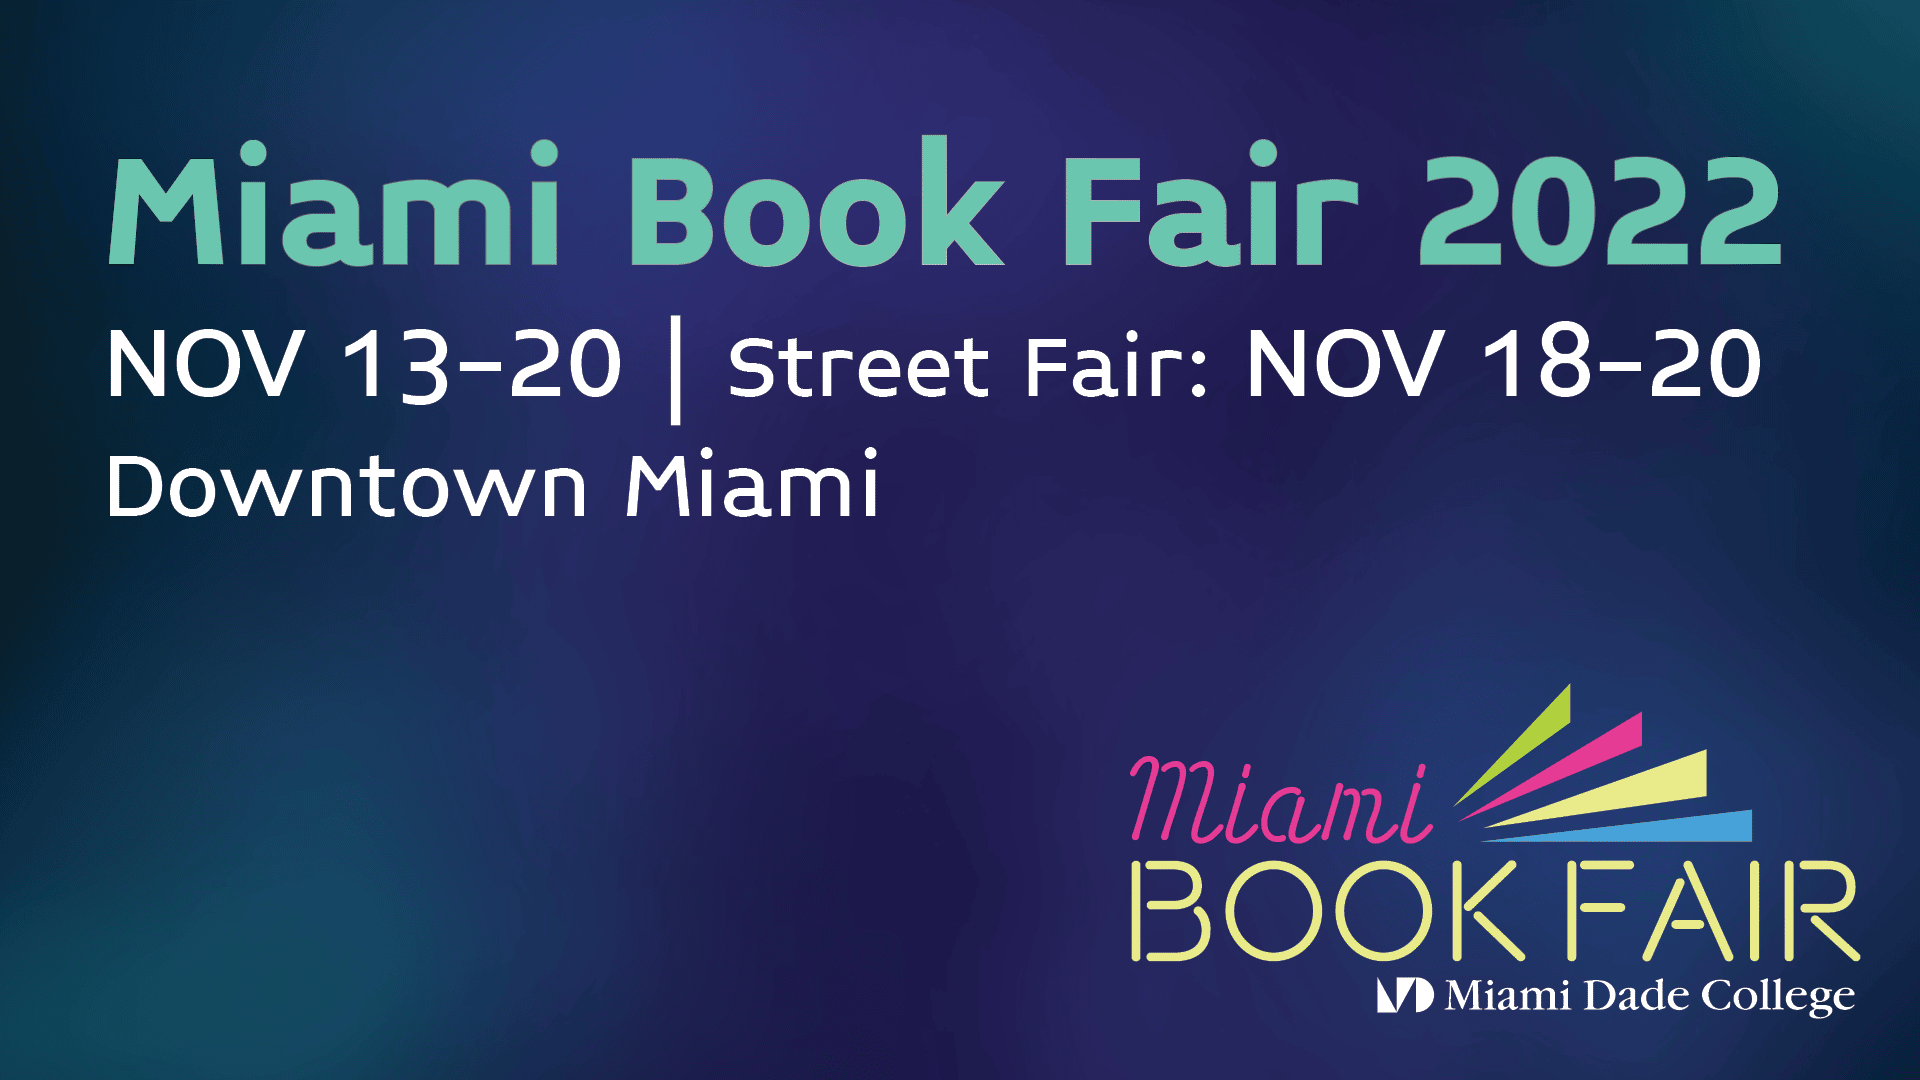 Miami Books Fair November 13-20, 2022